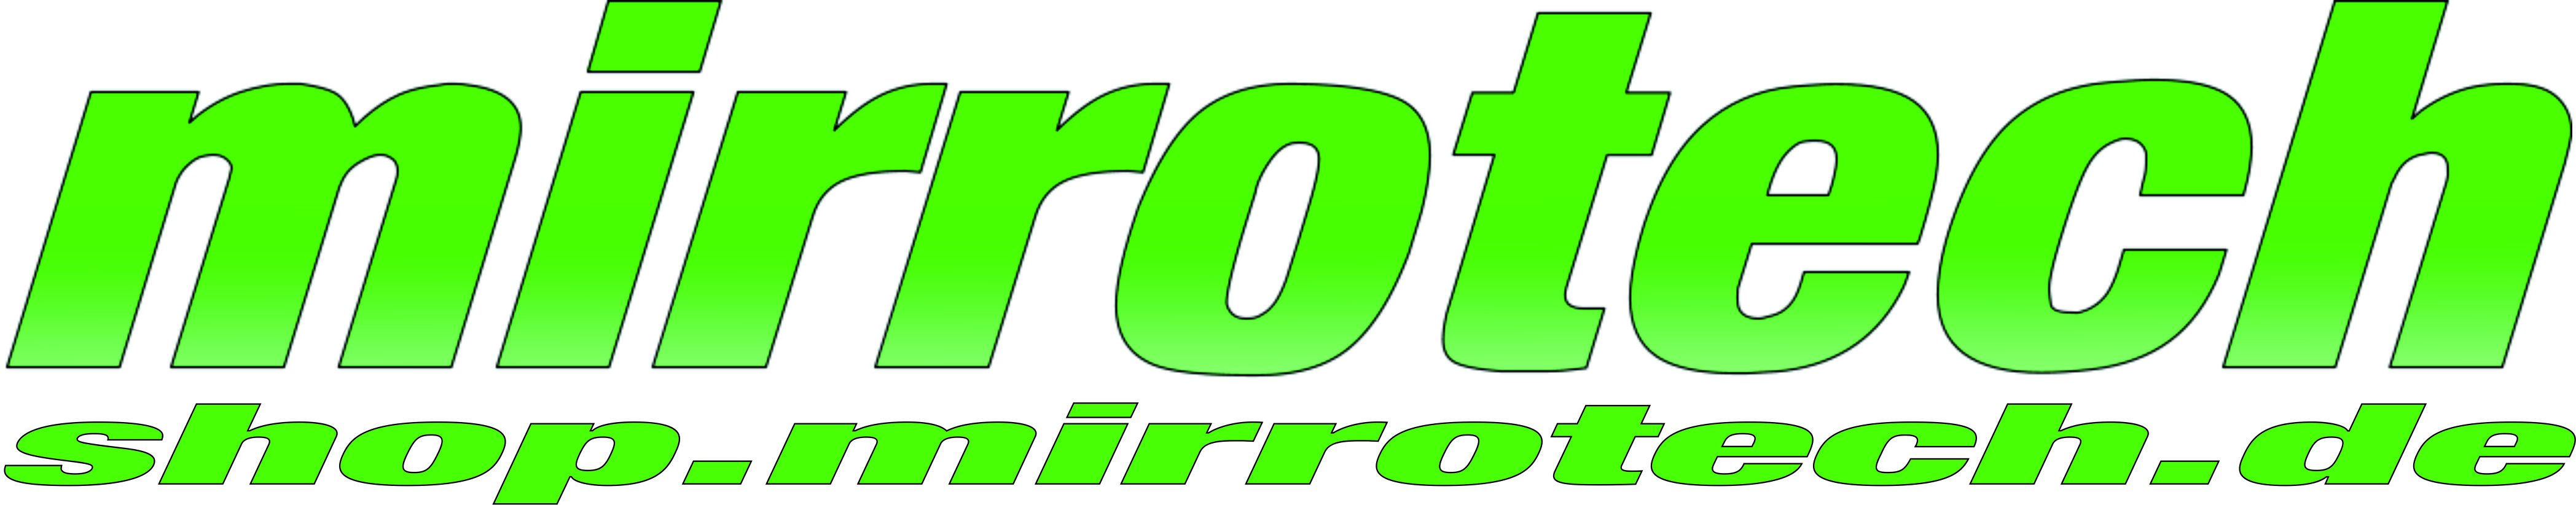 Mirrotech shop